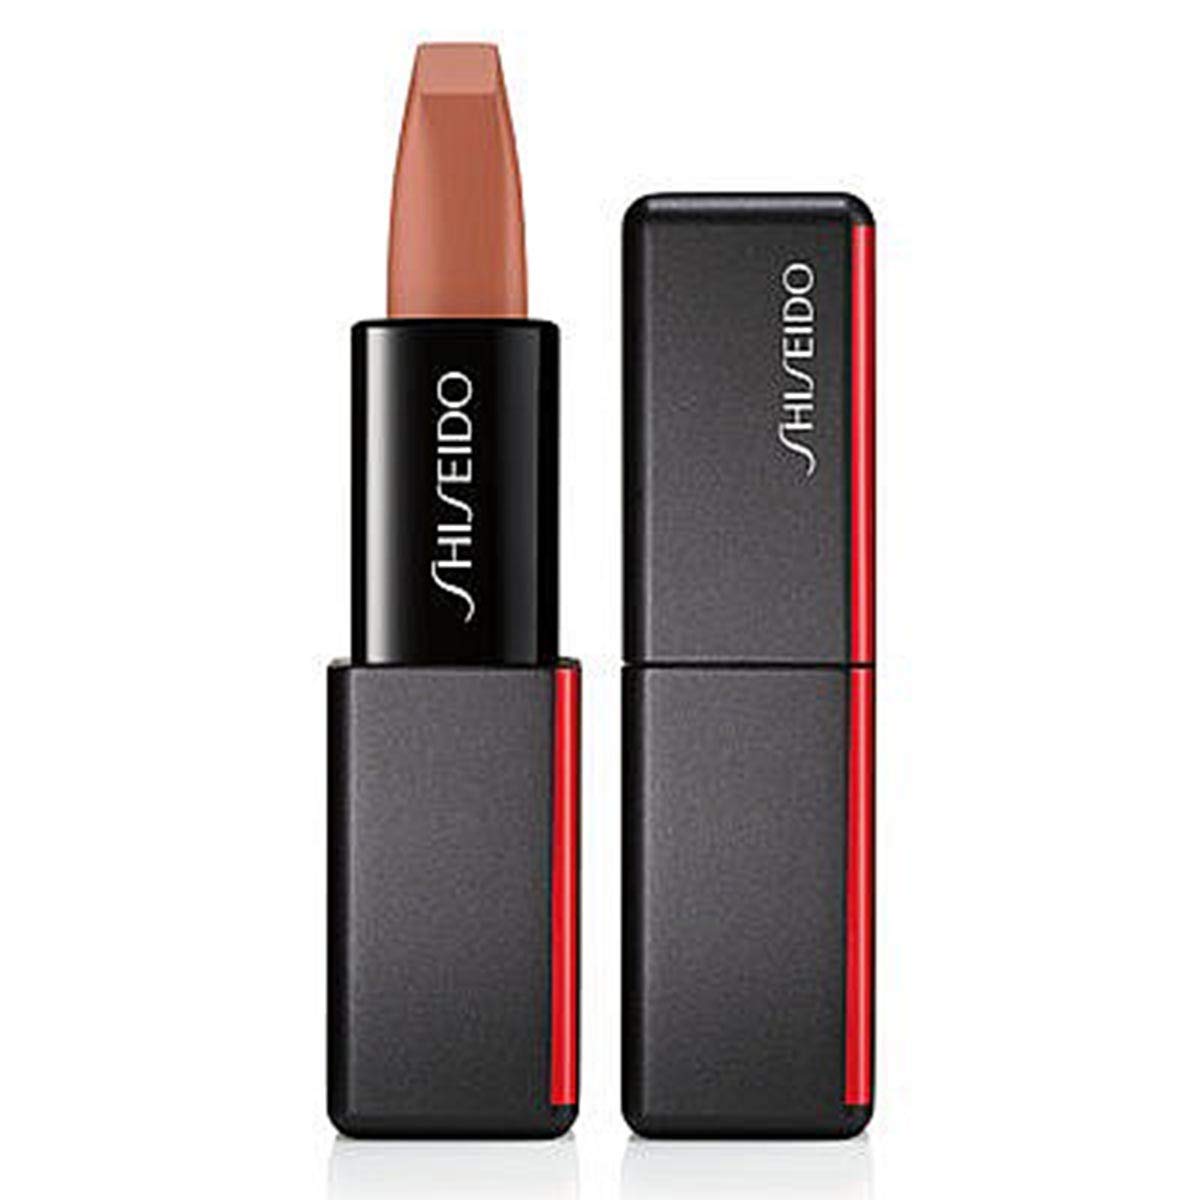 Shiseido Modern Matte Powder Lipstick, 504 Thigh High, 1 x 4 g, ‎cream-coloured